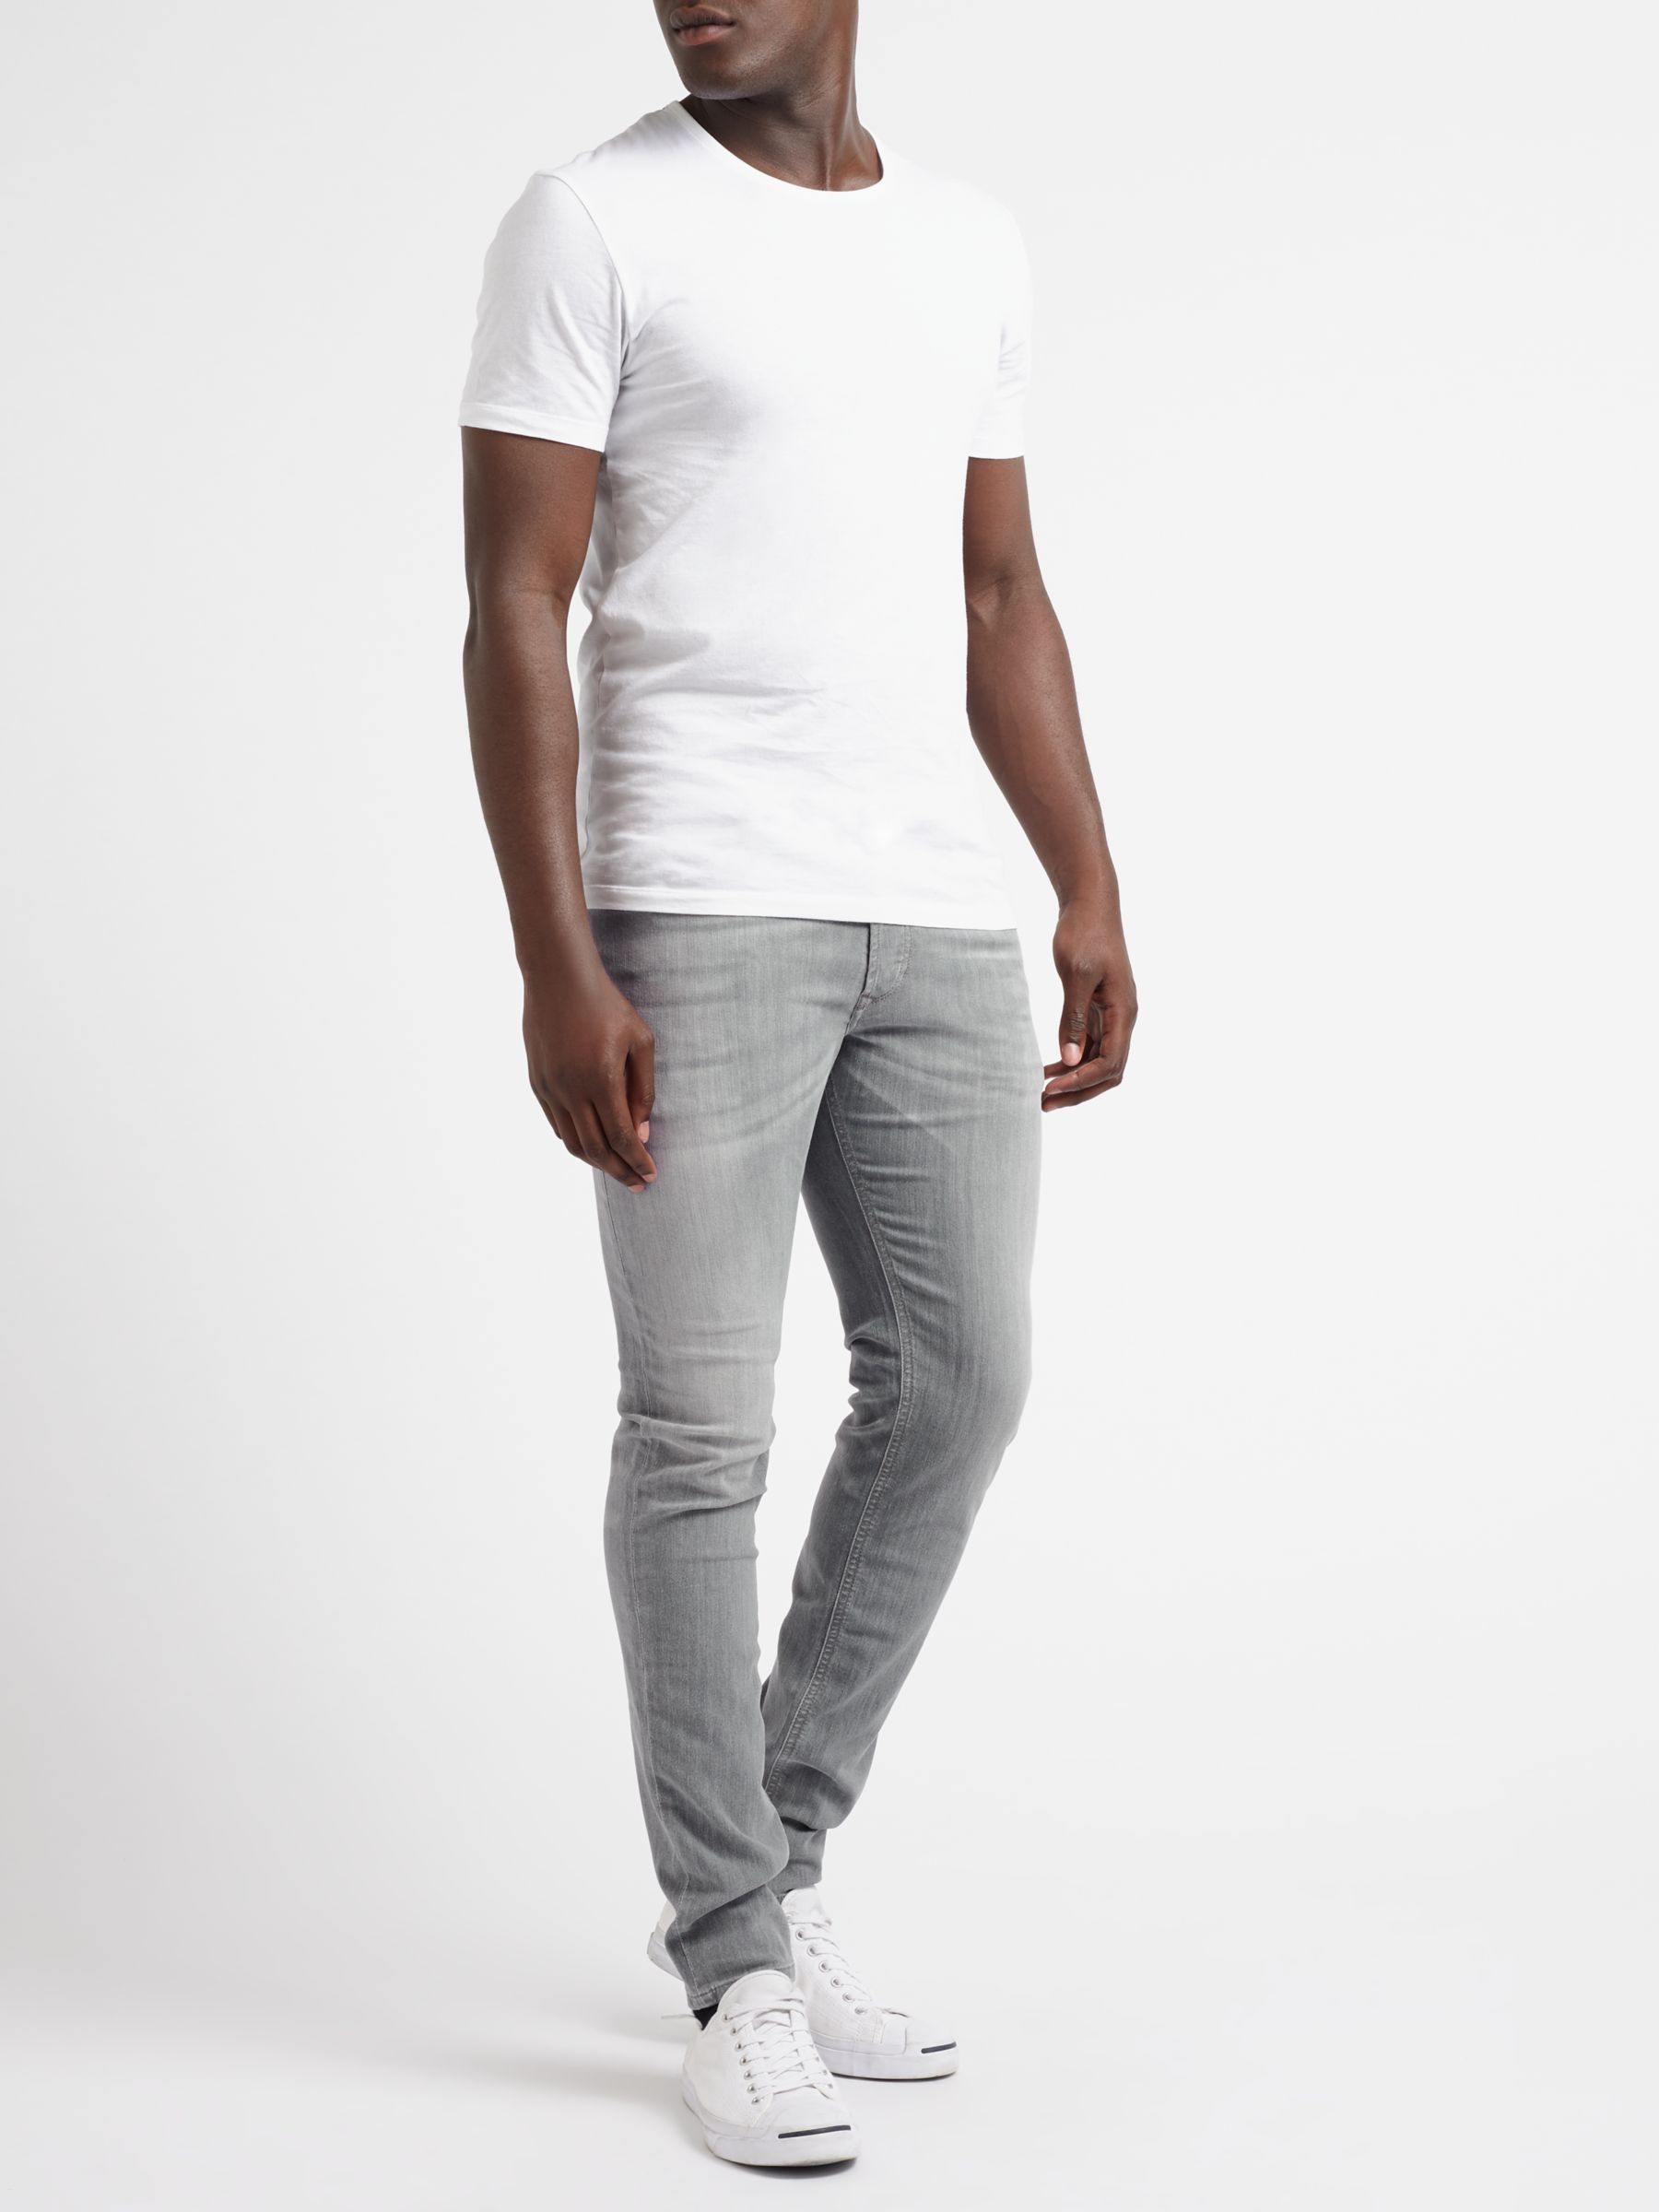 white grey jeans